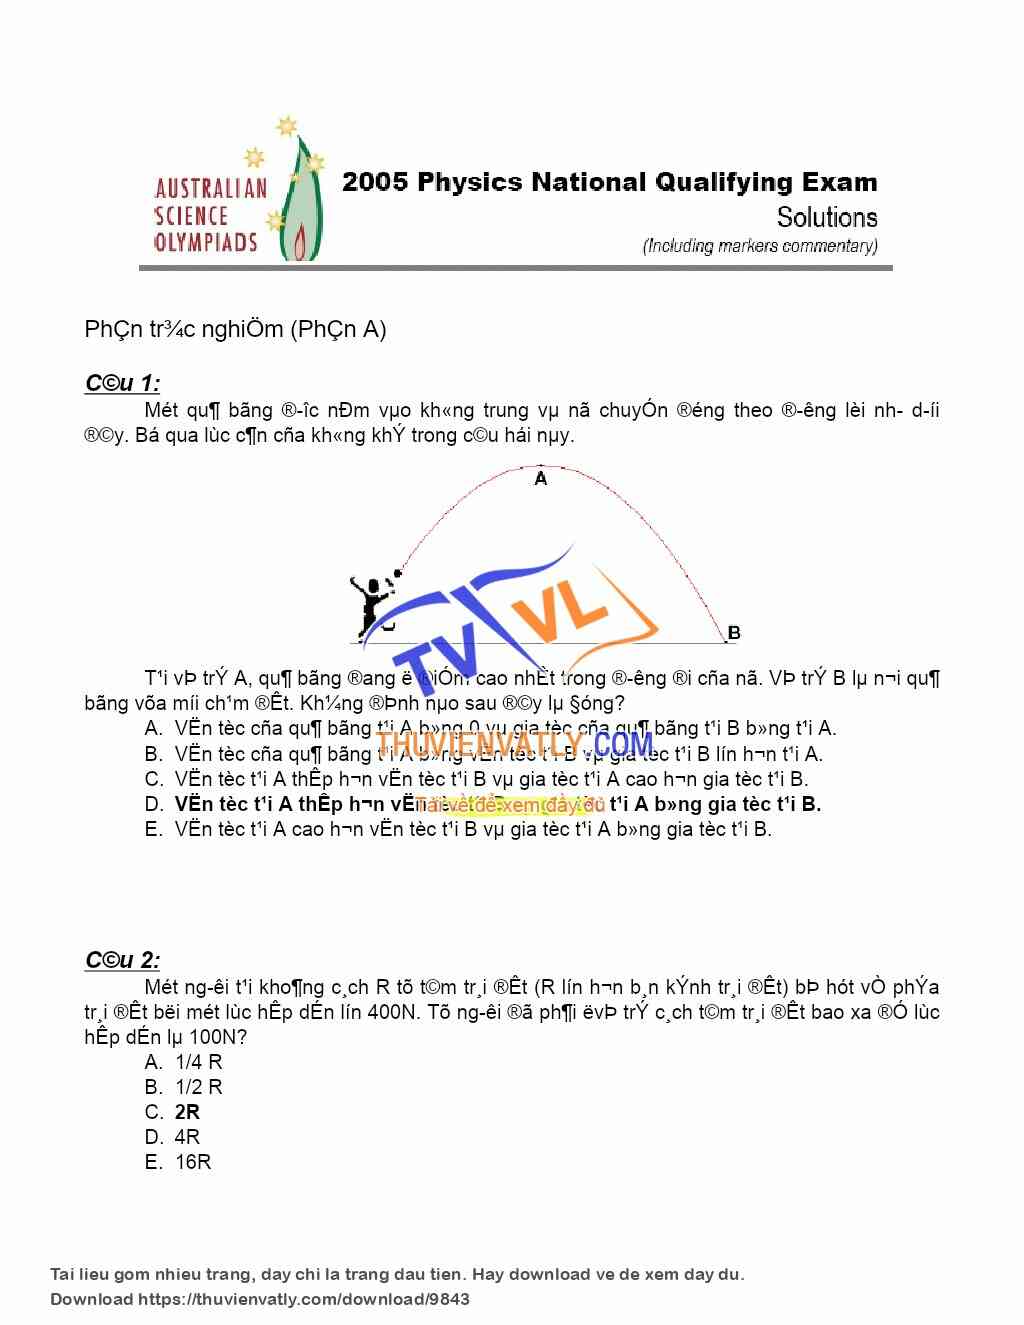 2005 National Qualifying Exam Solution